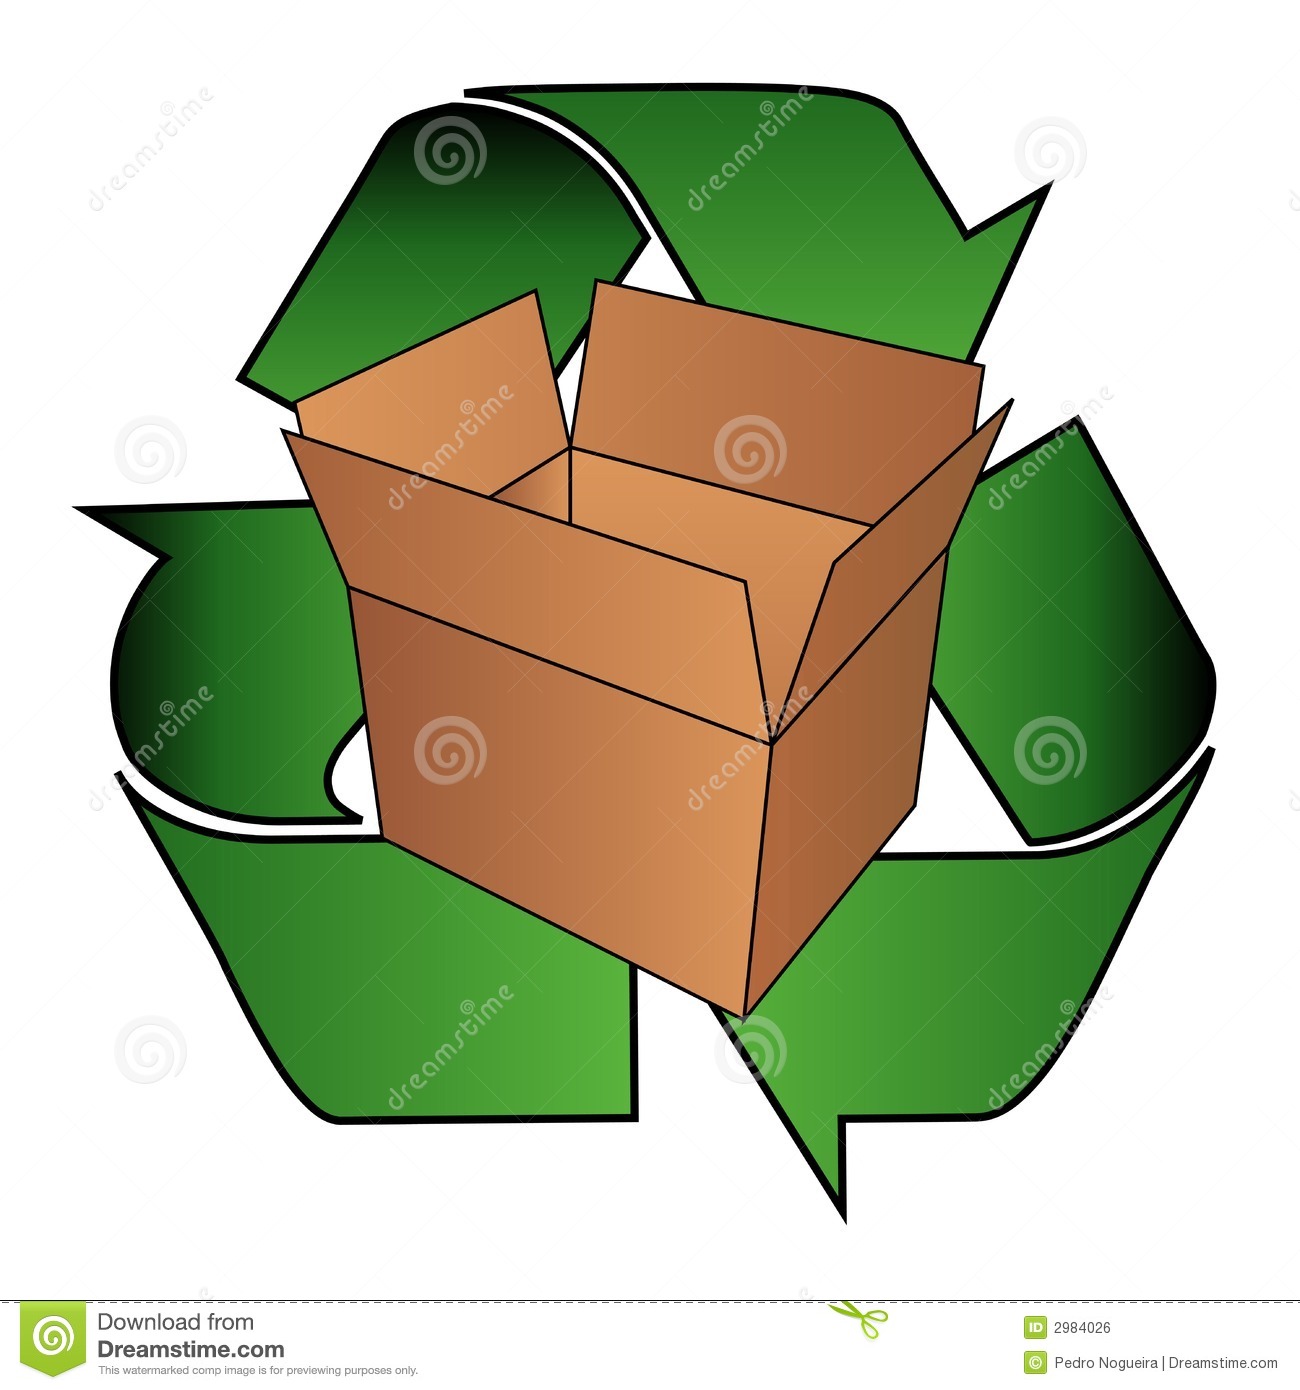 Cardboard Box Recycle Symbol Royalty Free Stock Image   Image  2984026